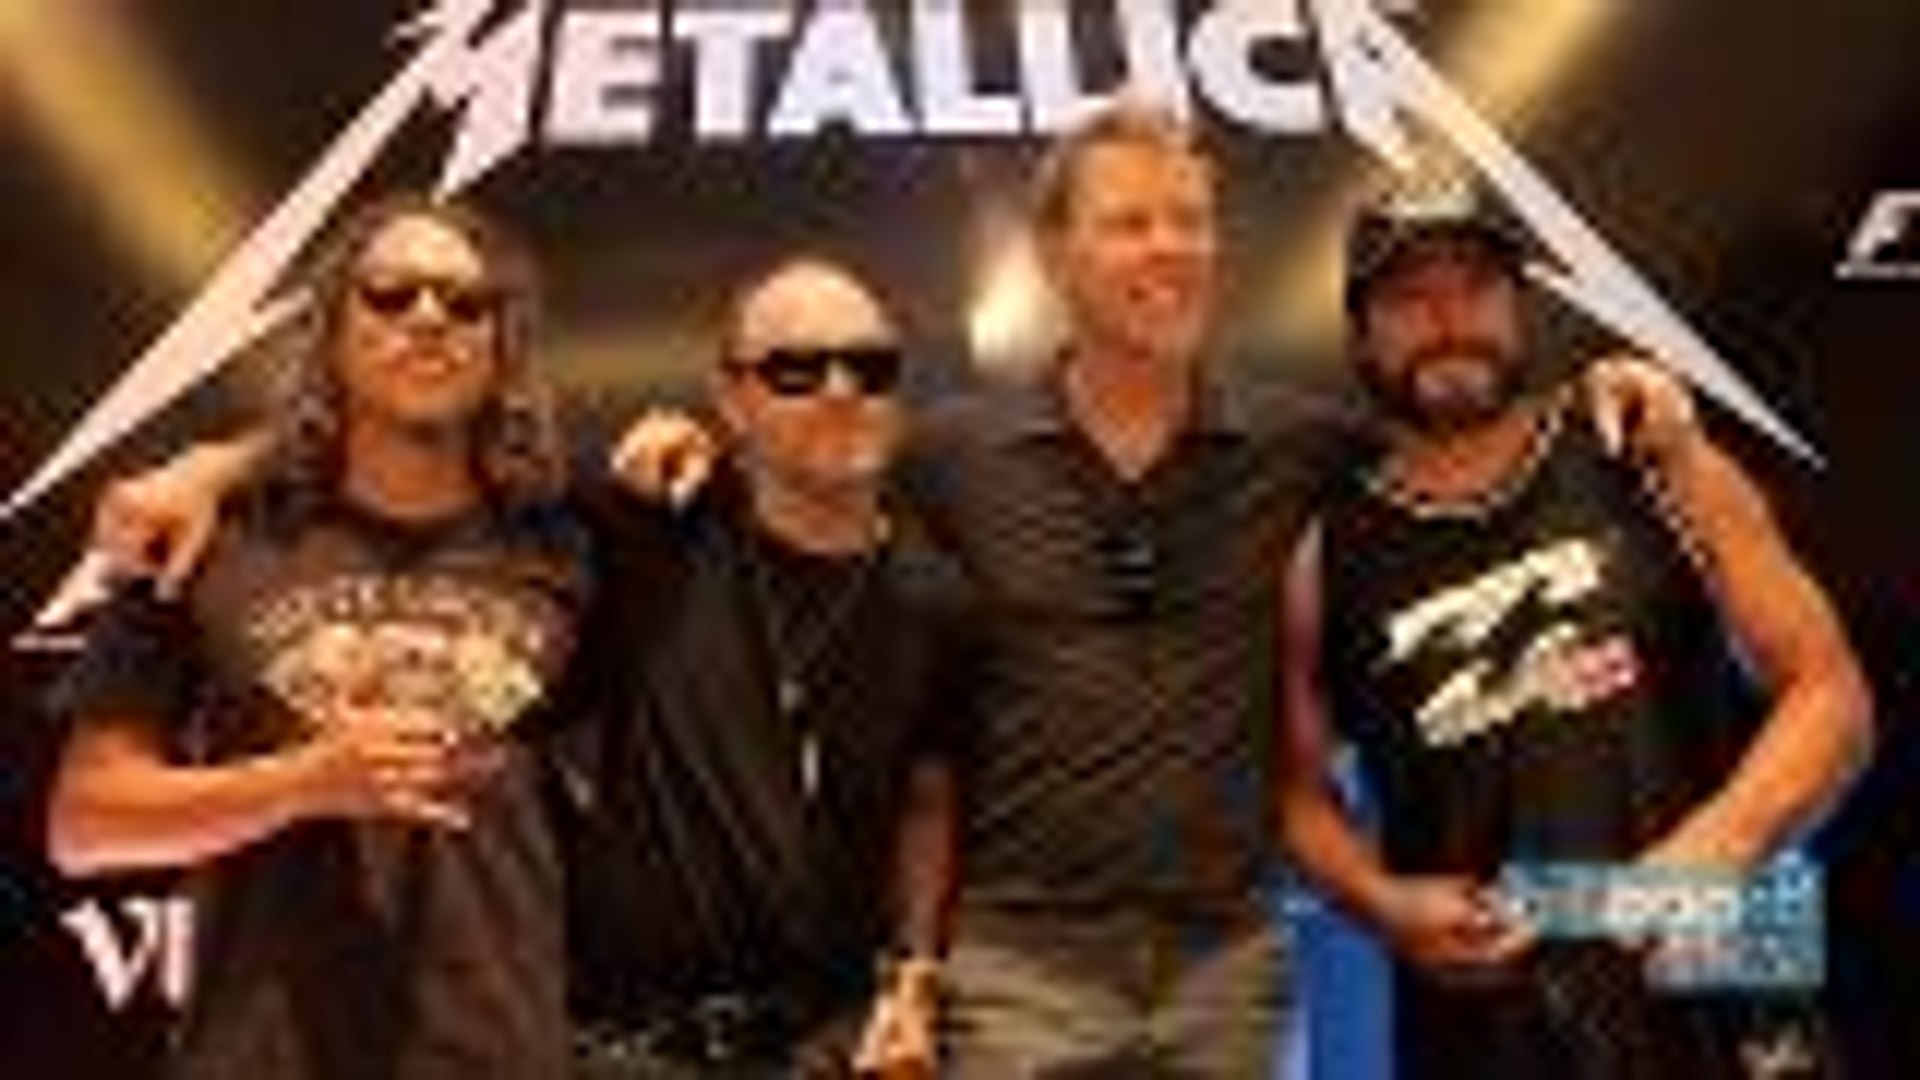 Metallica Headed on North America Tour | Billboard News - video Dailymotion